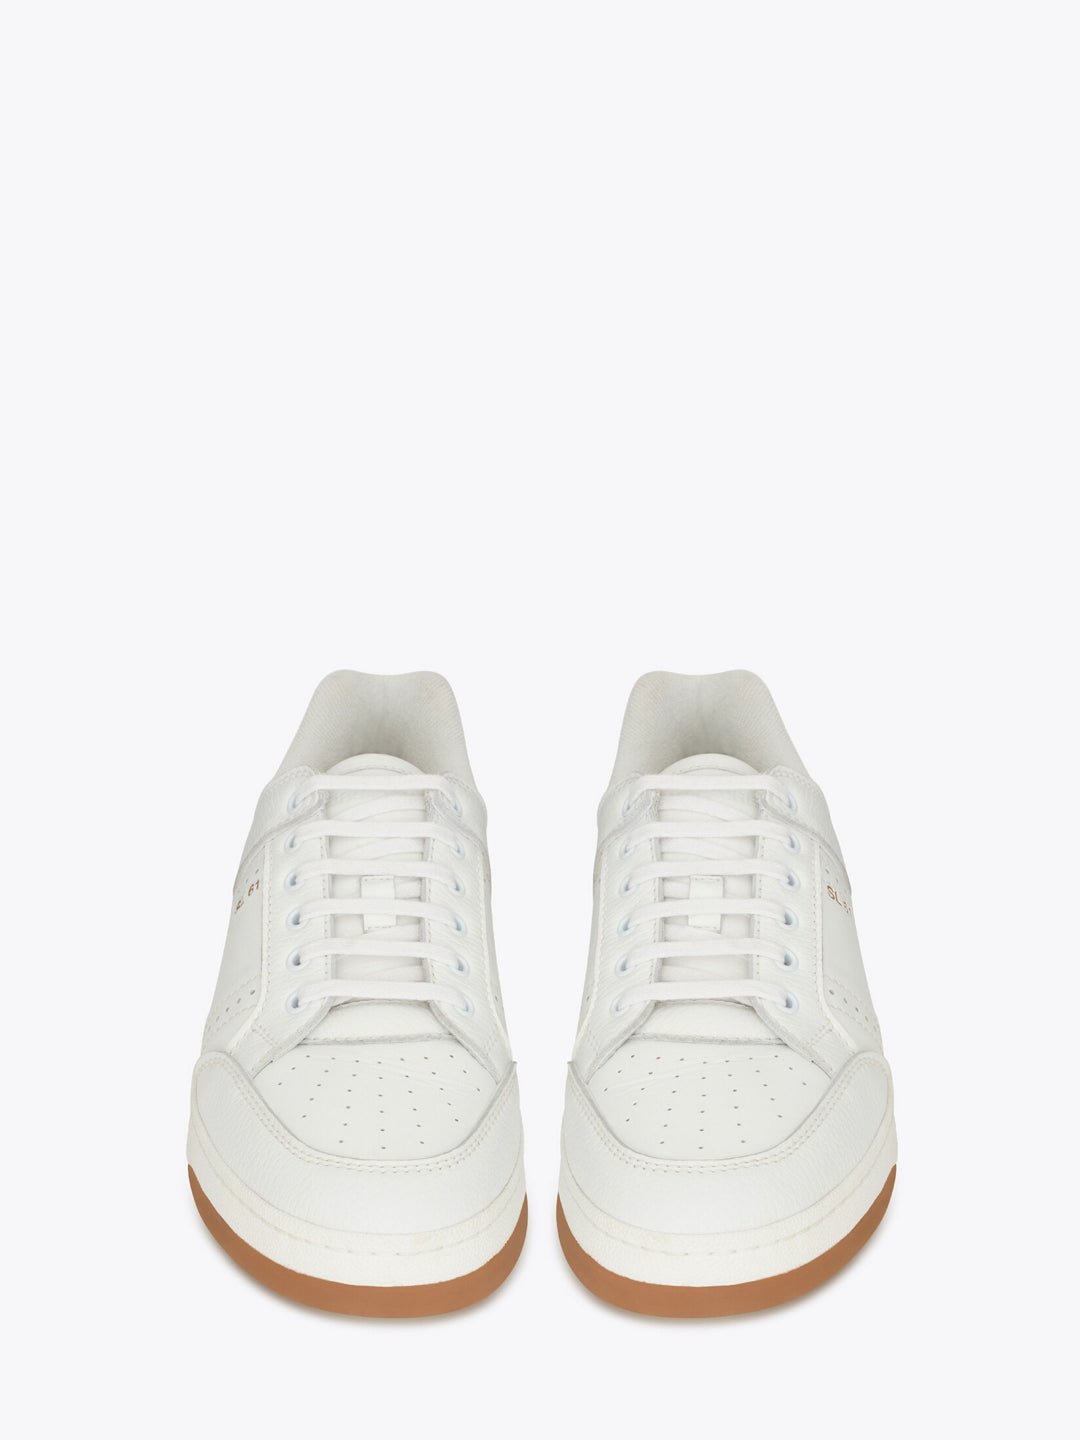 Saint Laurent White Calf Leather Low-Top Sneakers - Fizigo